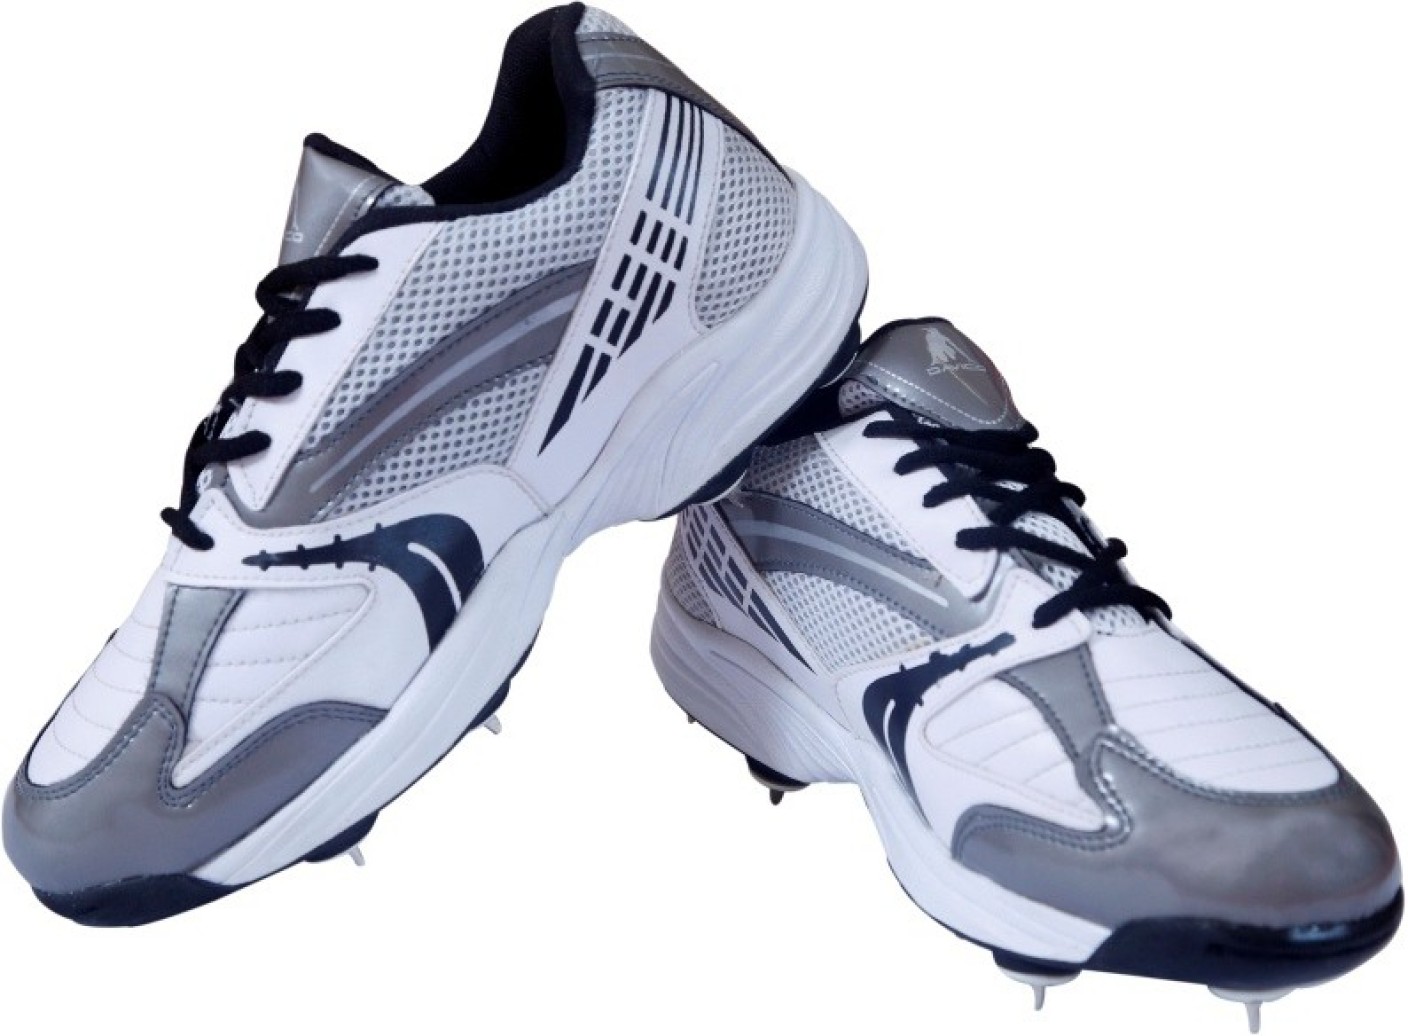 Davico Batting spike dynamic Cricket Shoes For Men - Buy Grey Color ...